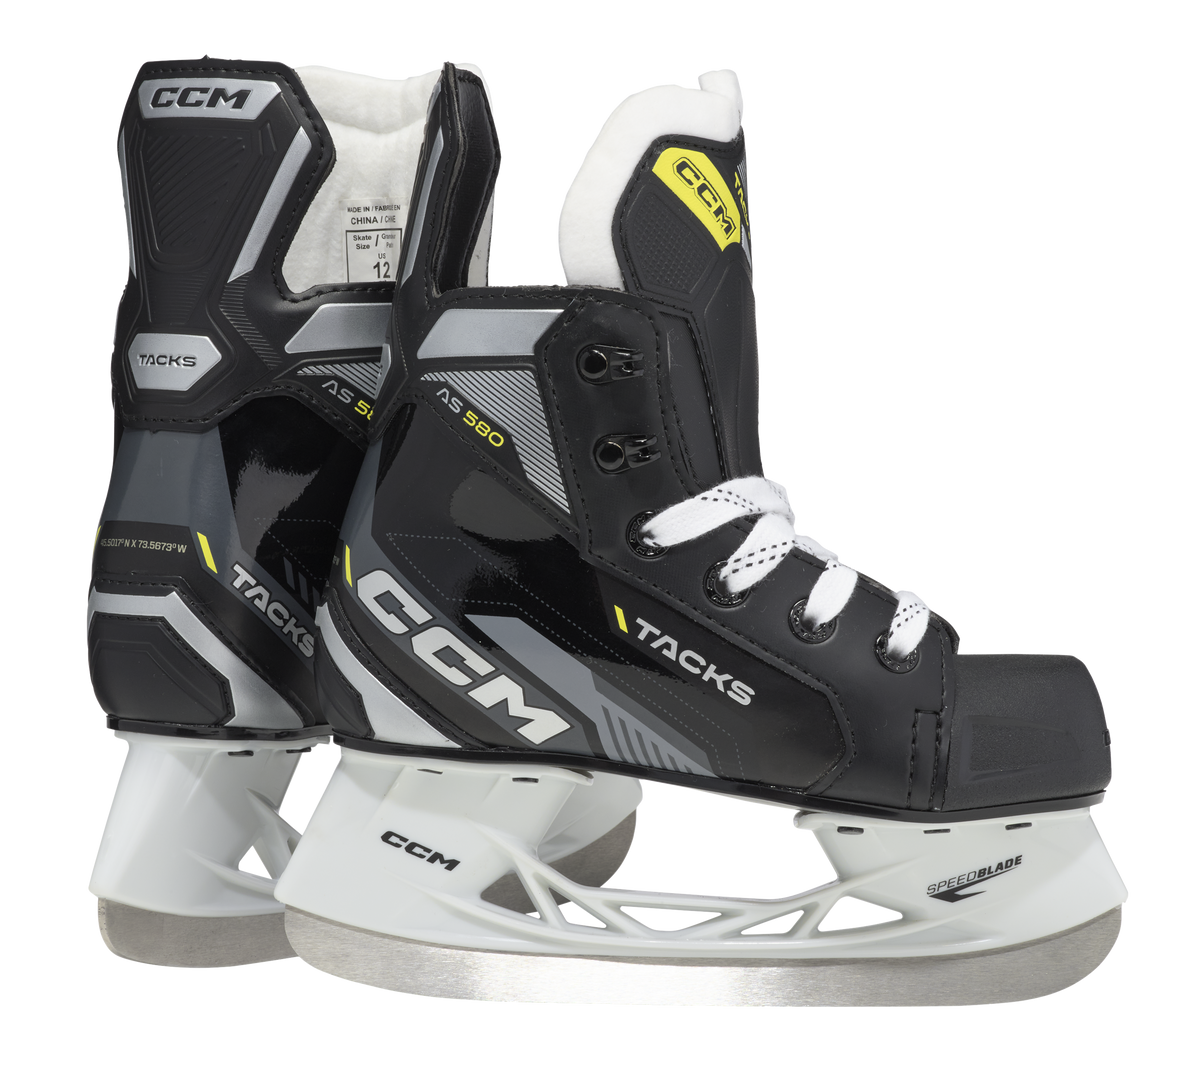 CCM Tacks AS-580 patins de hockey enfant